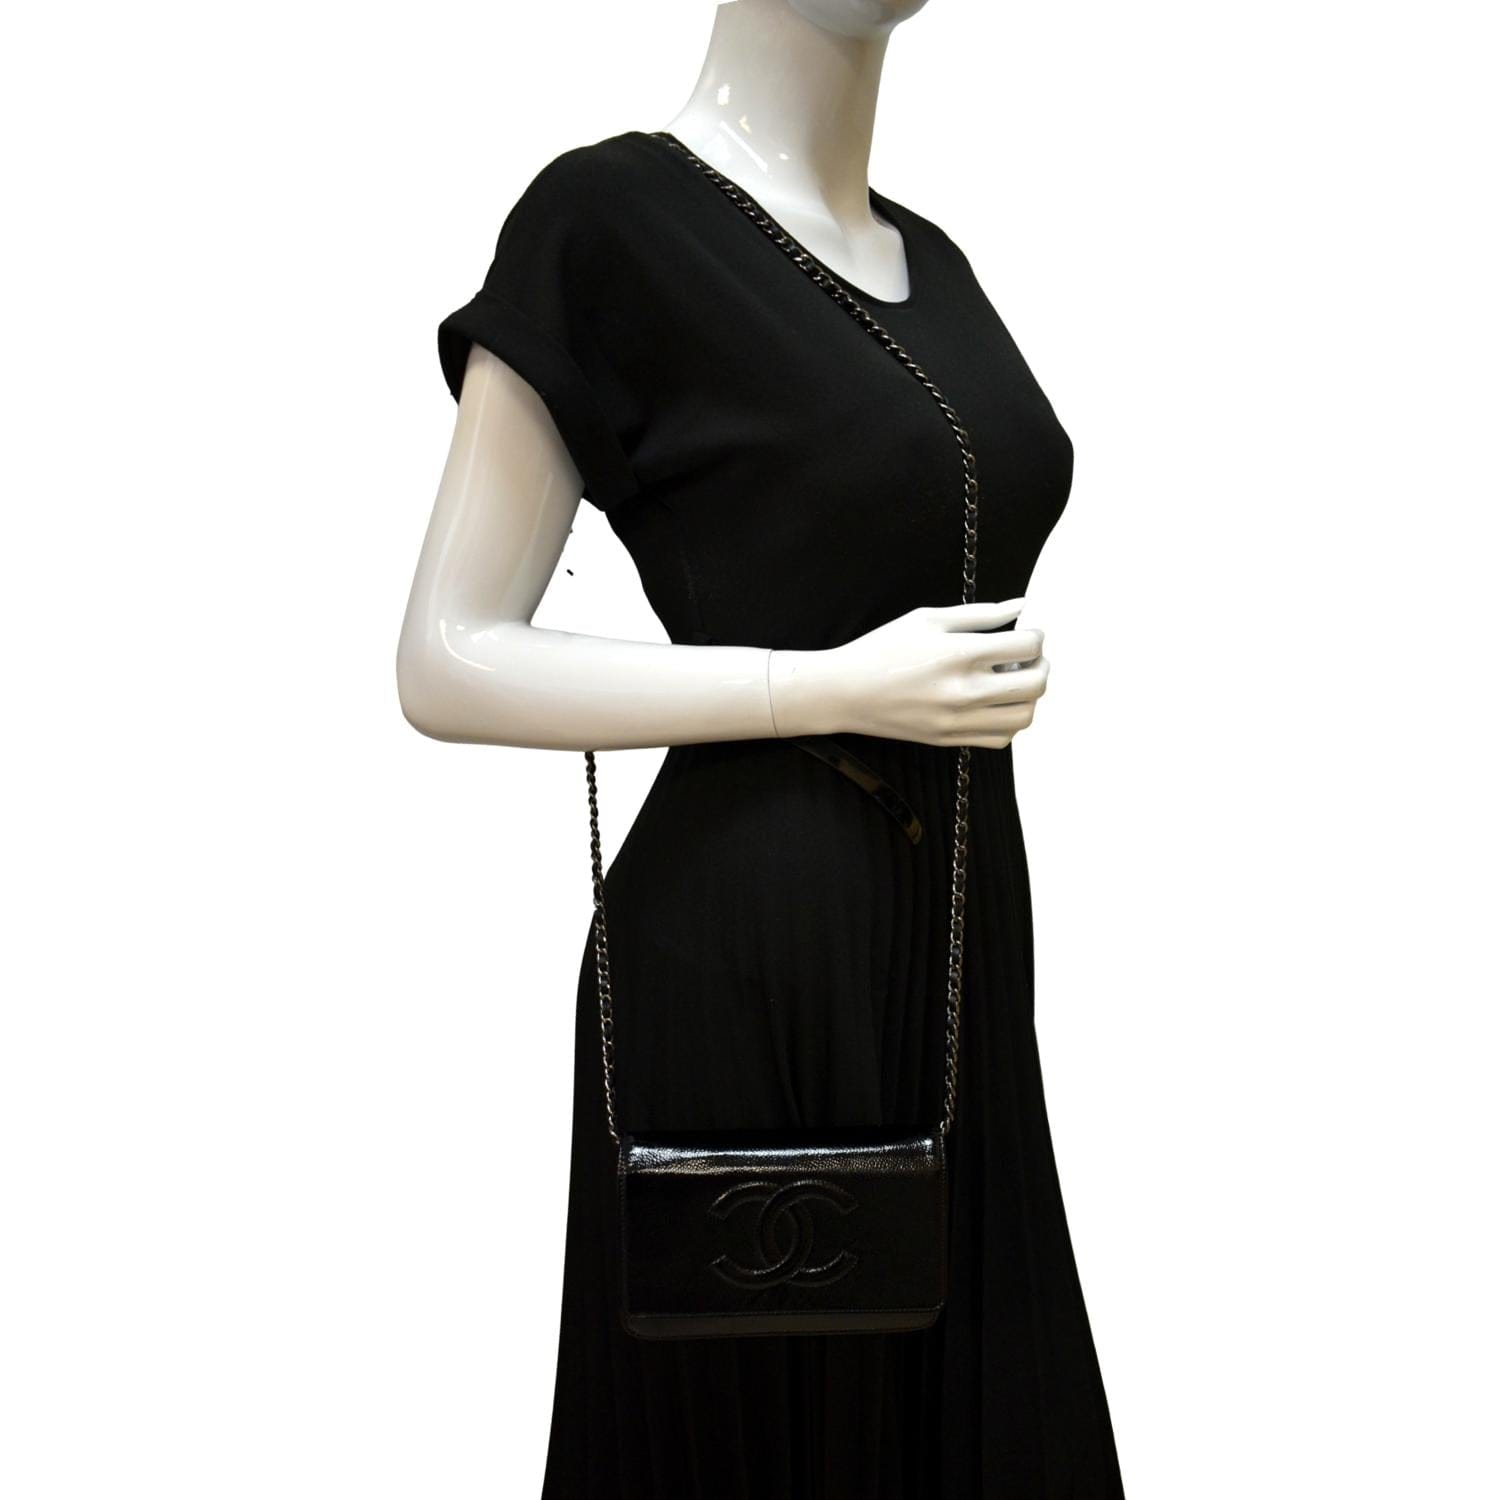 Original Chanel WOC Ladies Handbag W/Box and Dustbag "CREE"******